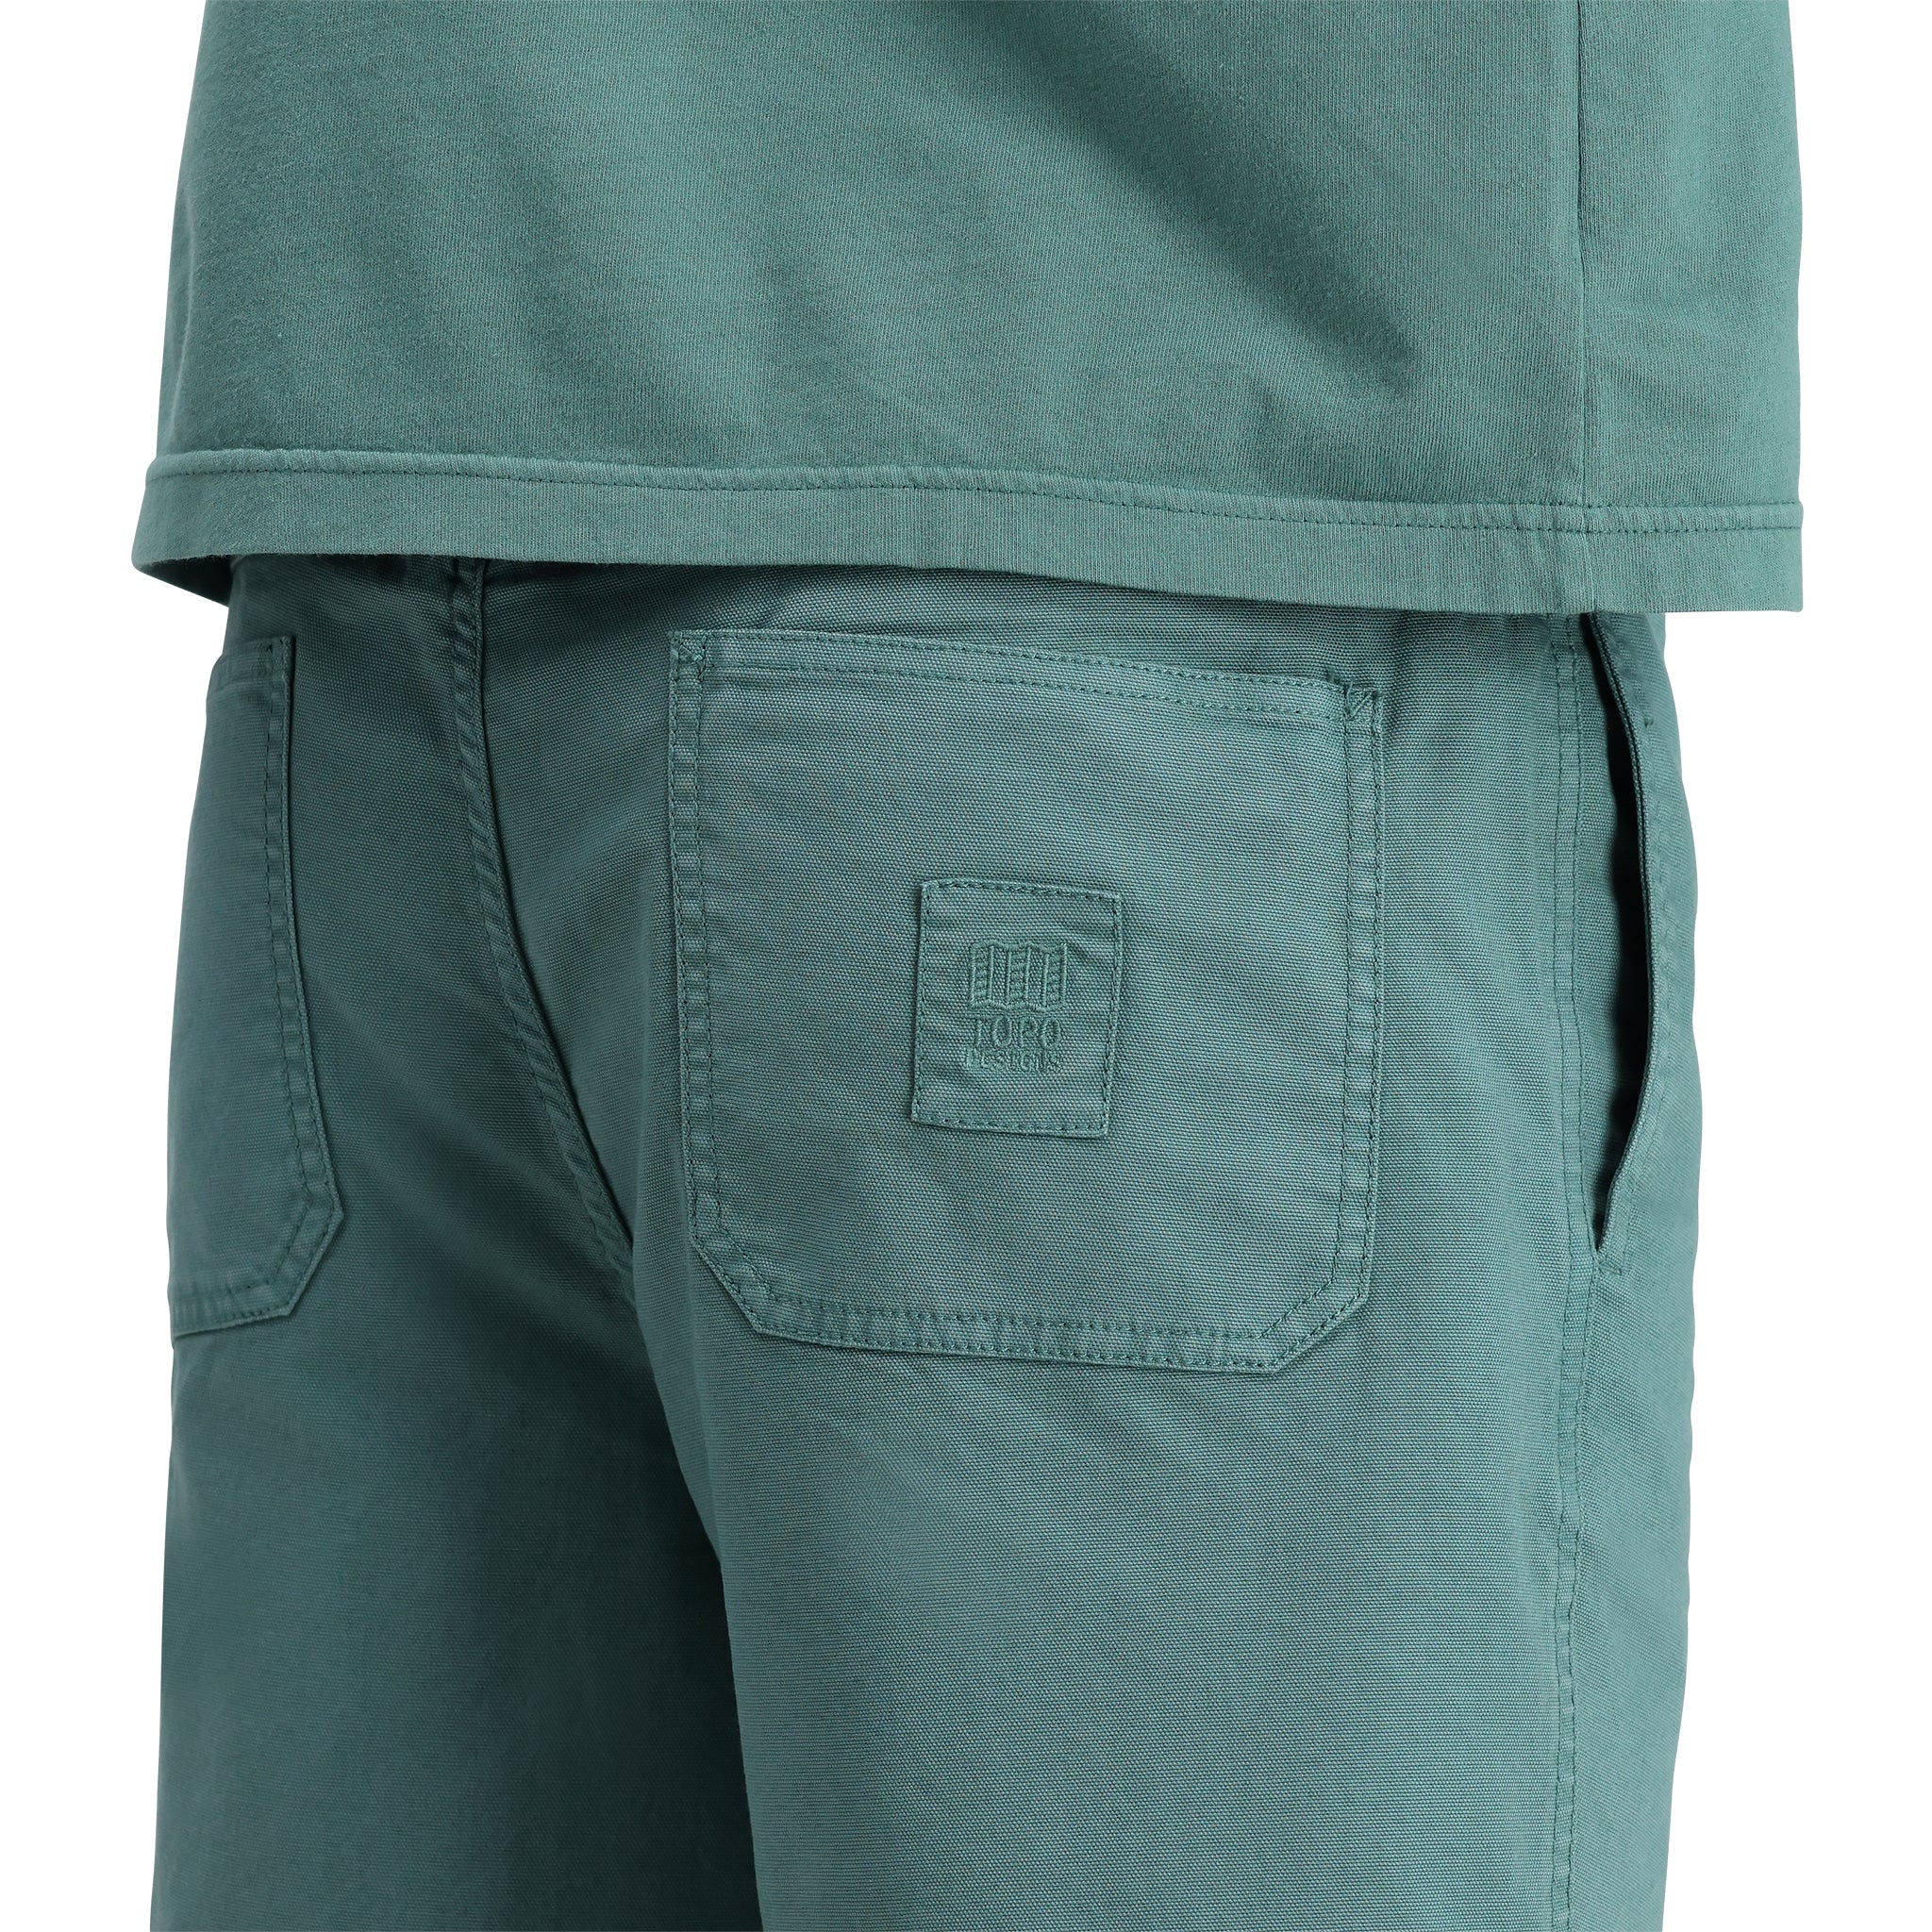 Detail shot of Topo Designs Dirt Shorts - Men's in "Sea Pine"